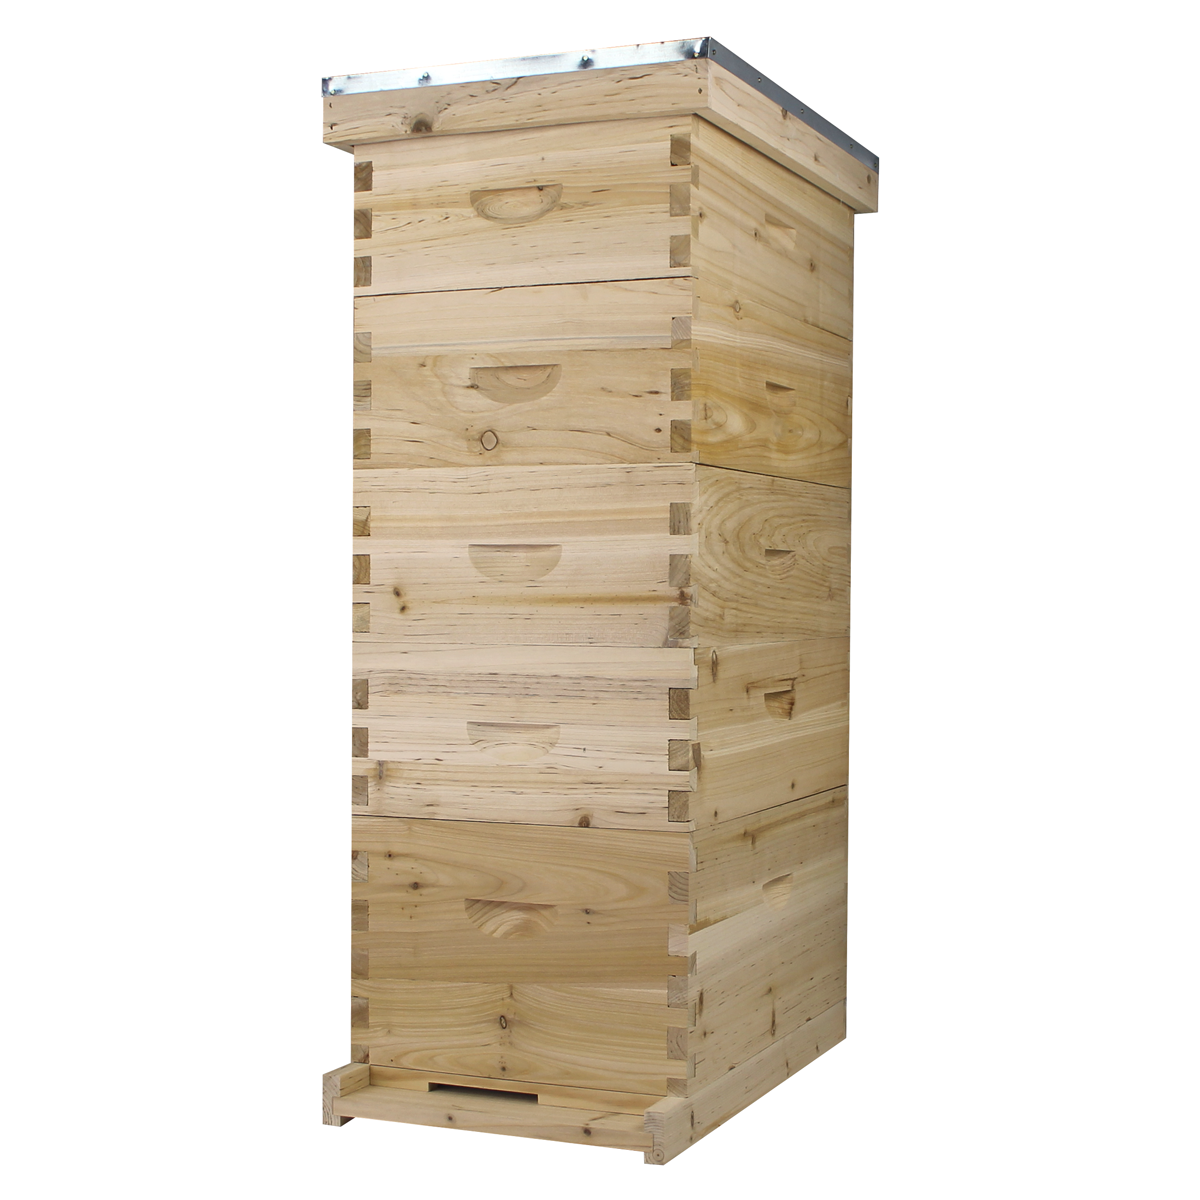 NuBee 8 Frame Beehive With 1 Deep Bee Box & 4 Medium Bee Boxes